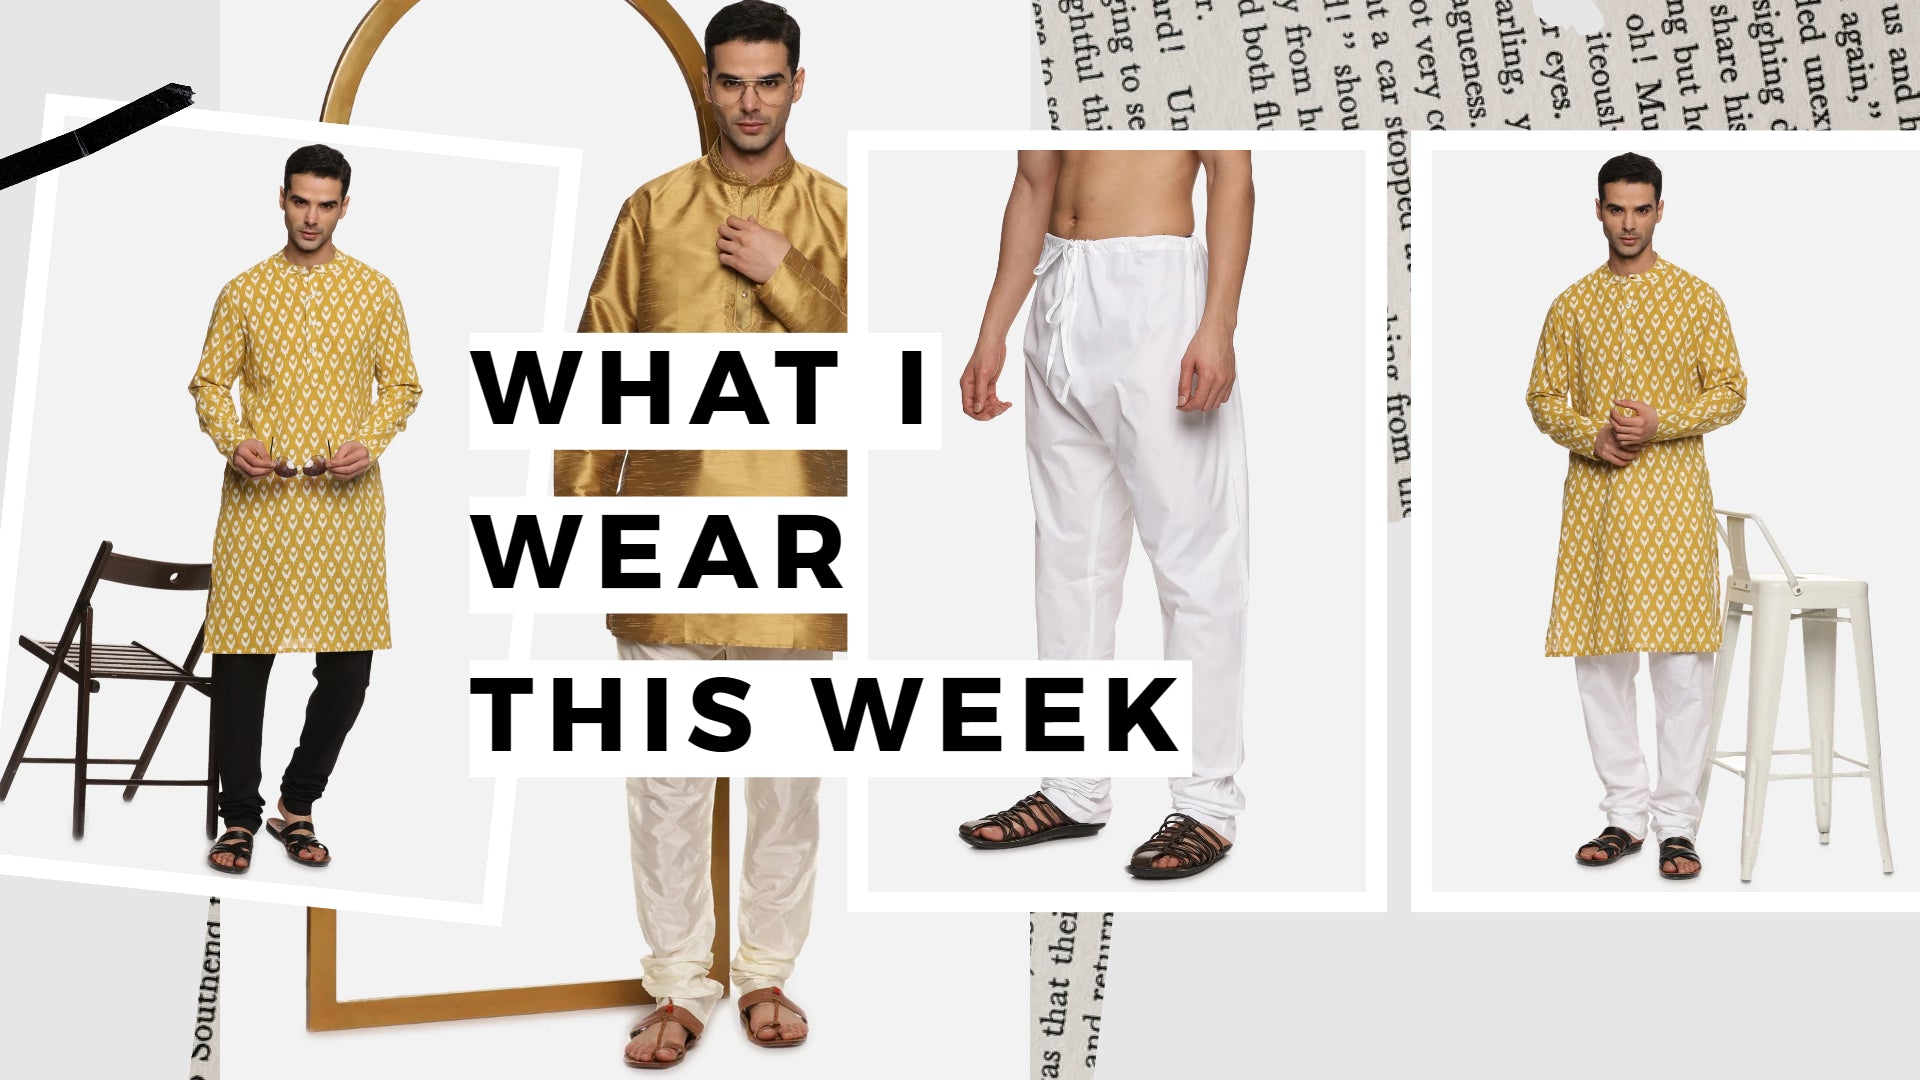 Trend Alert: Short Pyjama Sets for Men - The Latest Fashion Statement